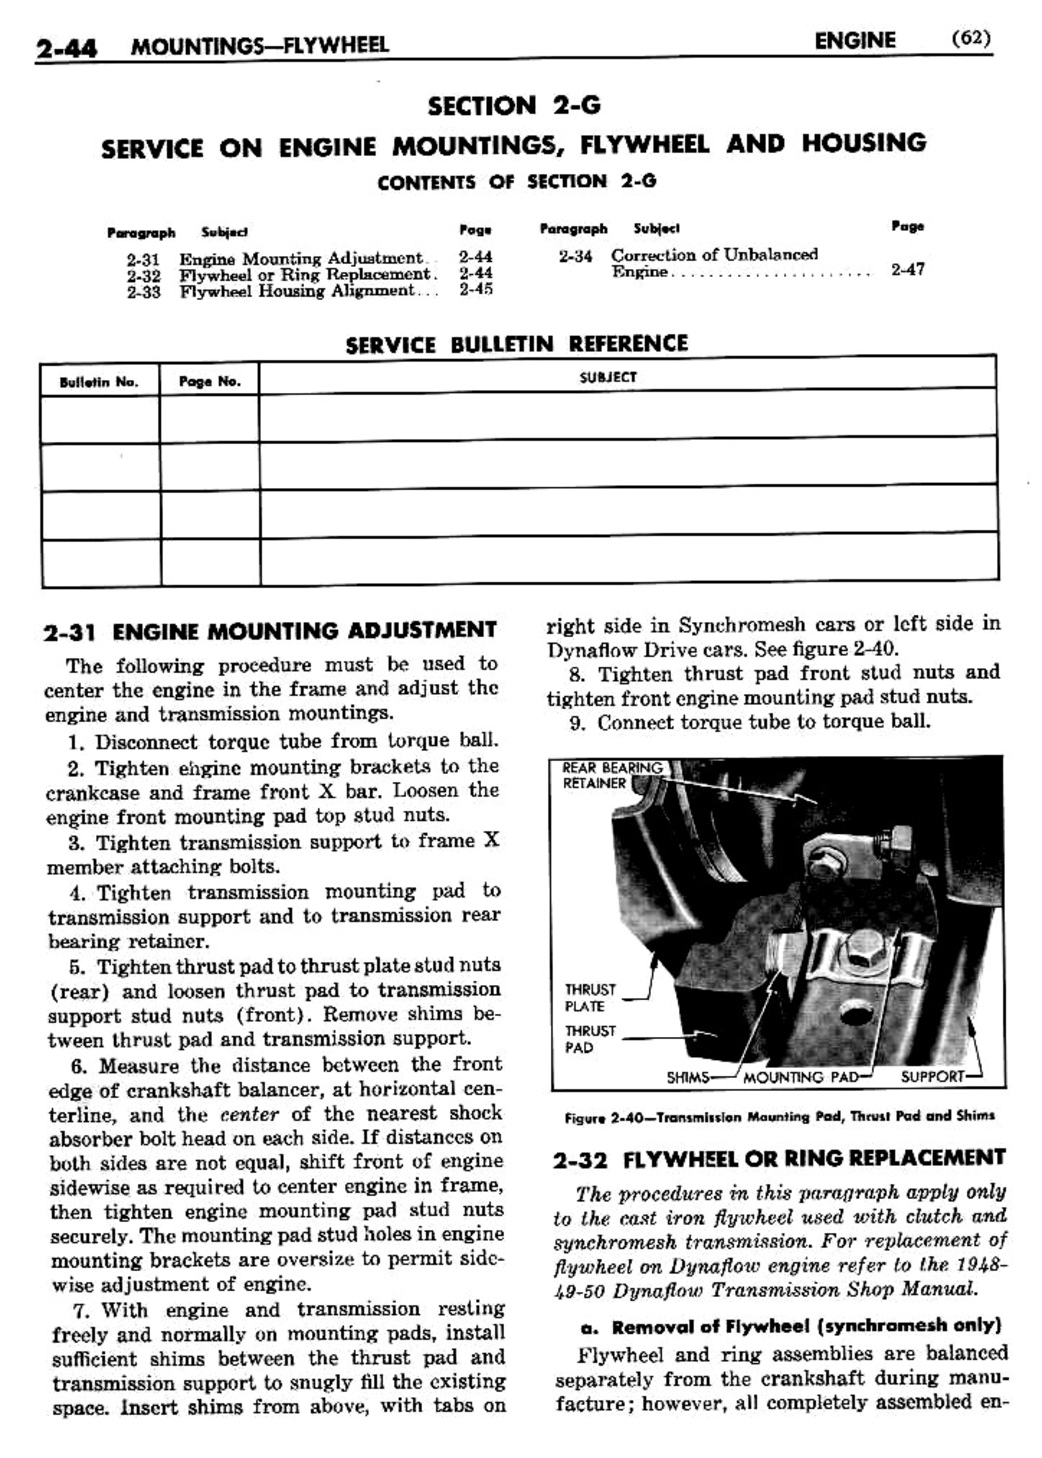 n_03 1950 Buick Shop Manual - Engine-044-044.jpg